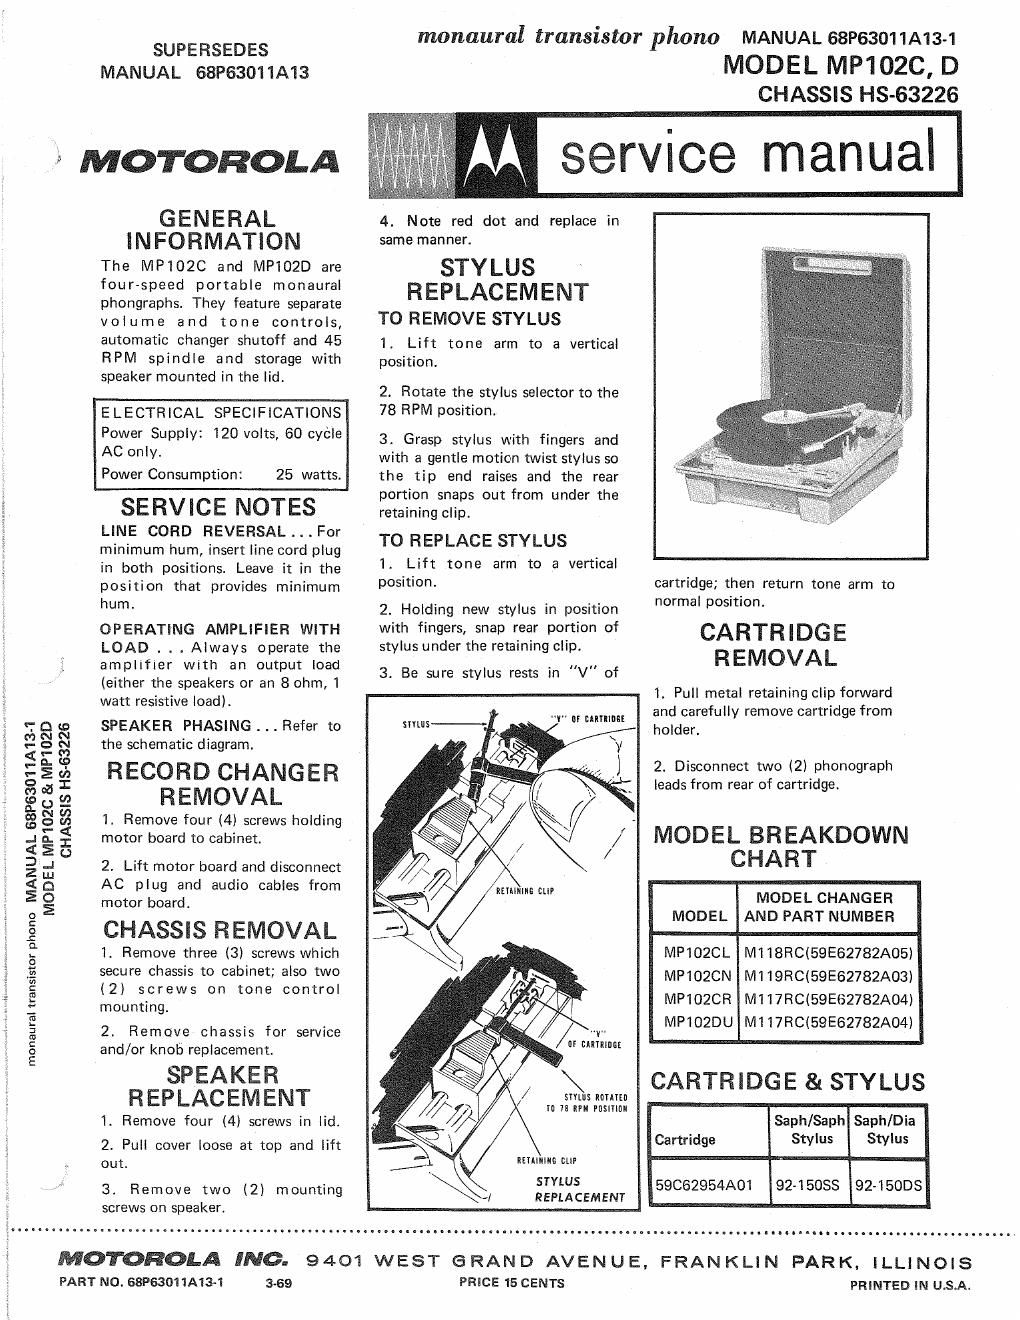 motorola mp 102 d service manual